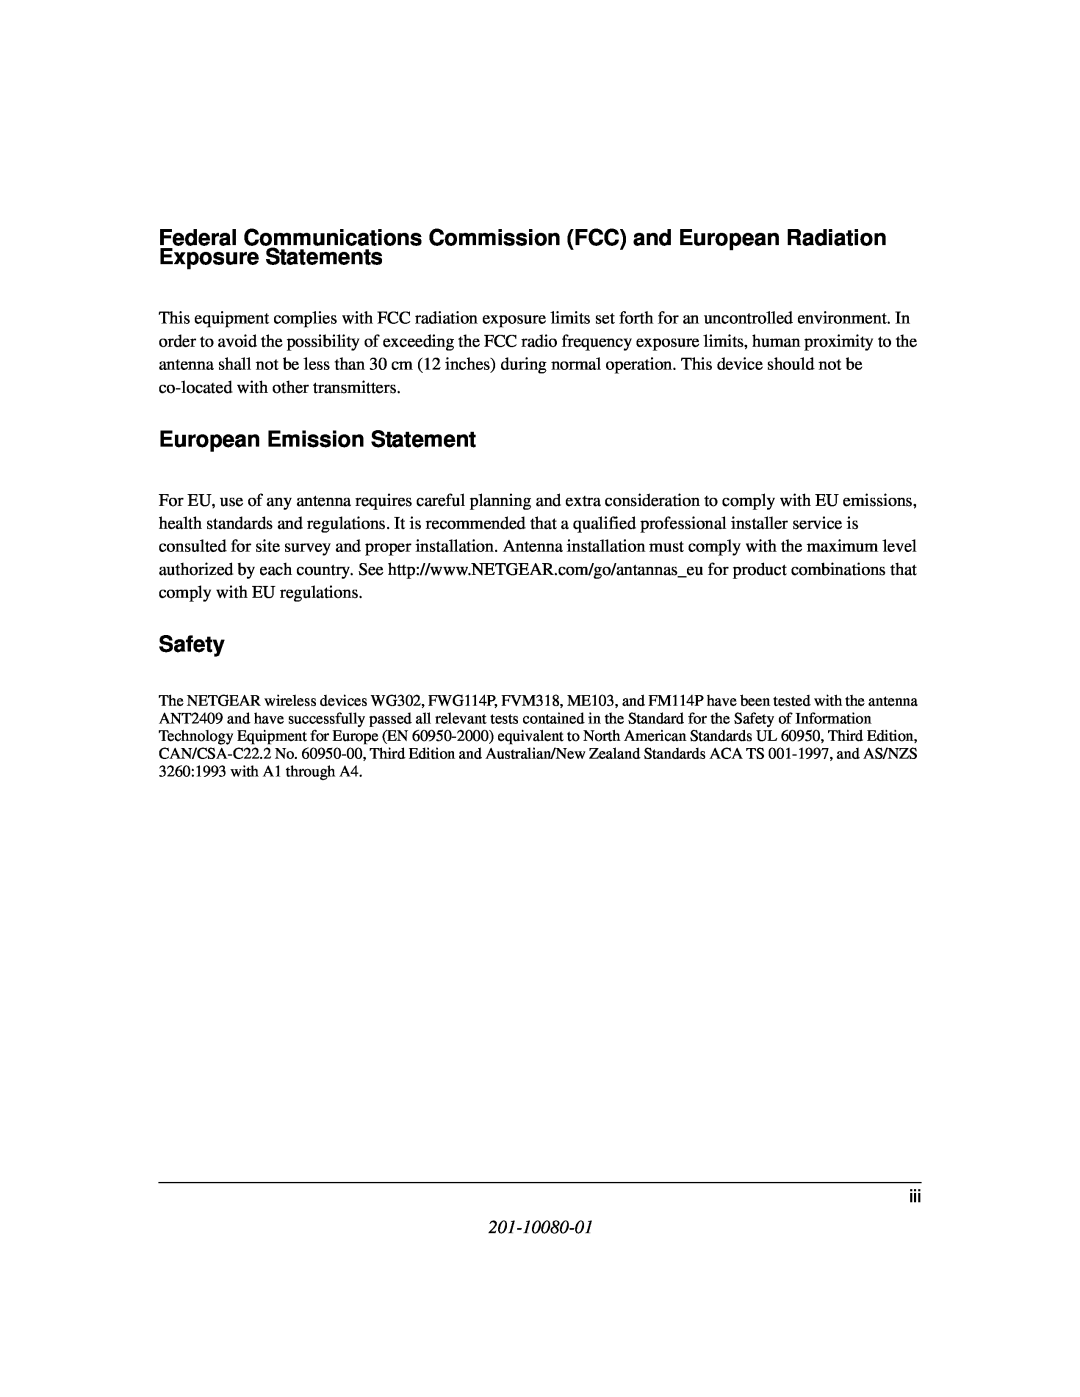 NETGEAR 2409 manual European Emission Statement, Safety, 201-10080-01 